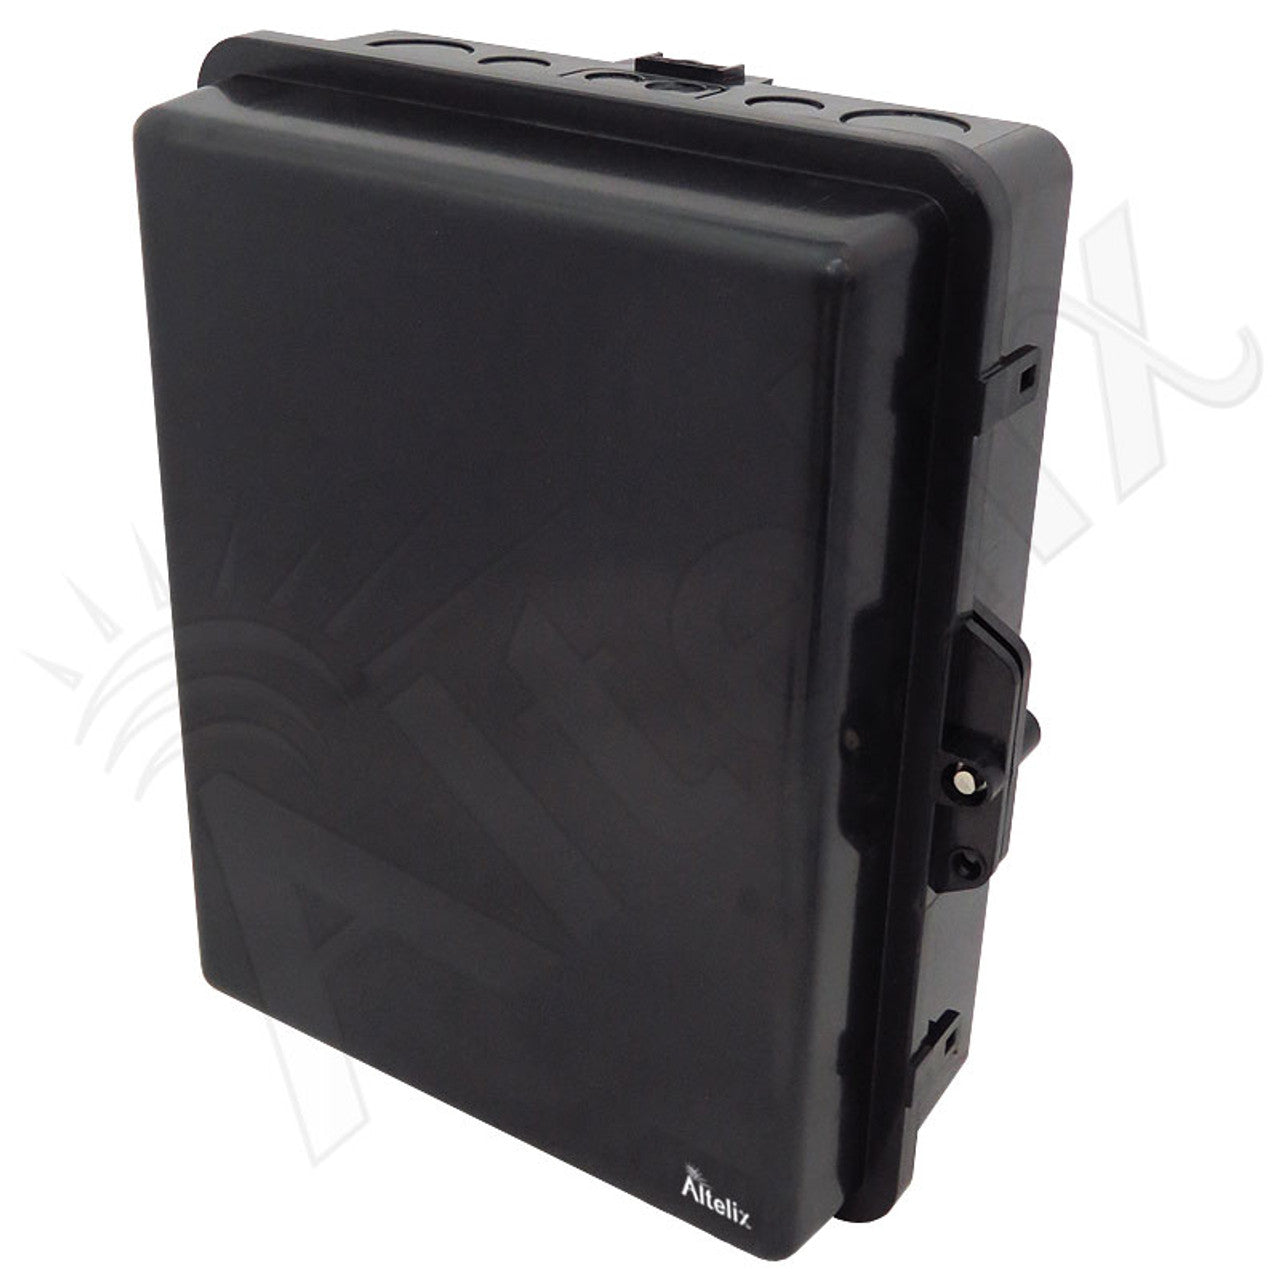 Buy black Altelix 14x11x5 PC + ABS Weatherproof Utility Box NEMA Enclosure with Pole Mount Kit